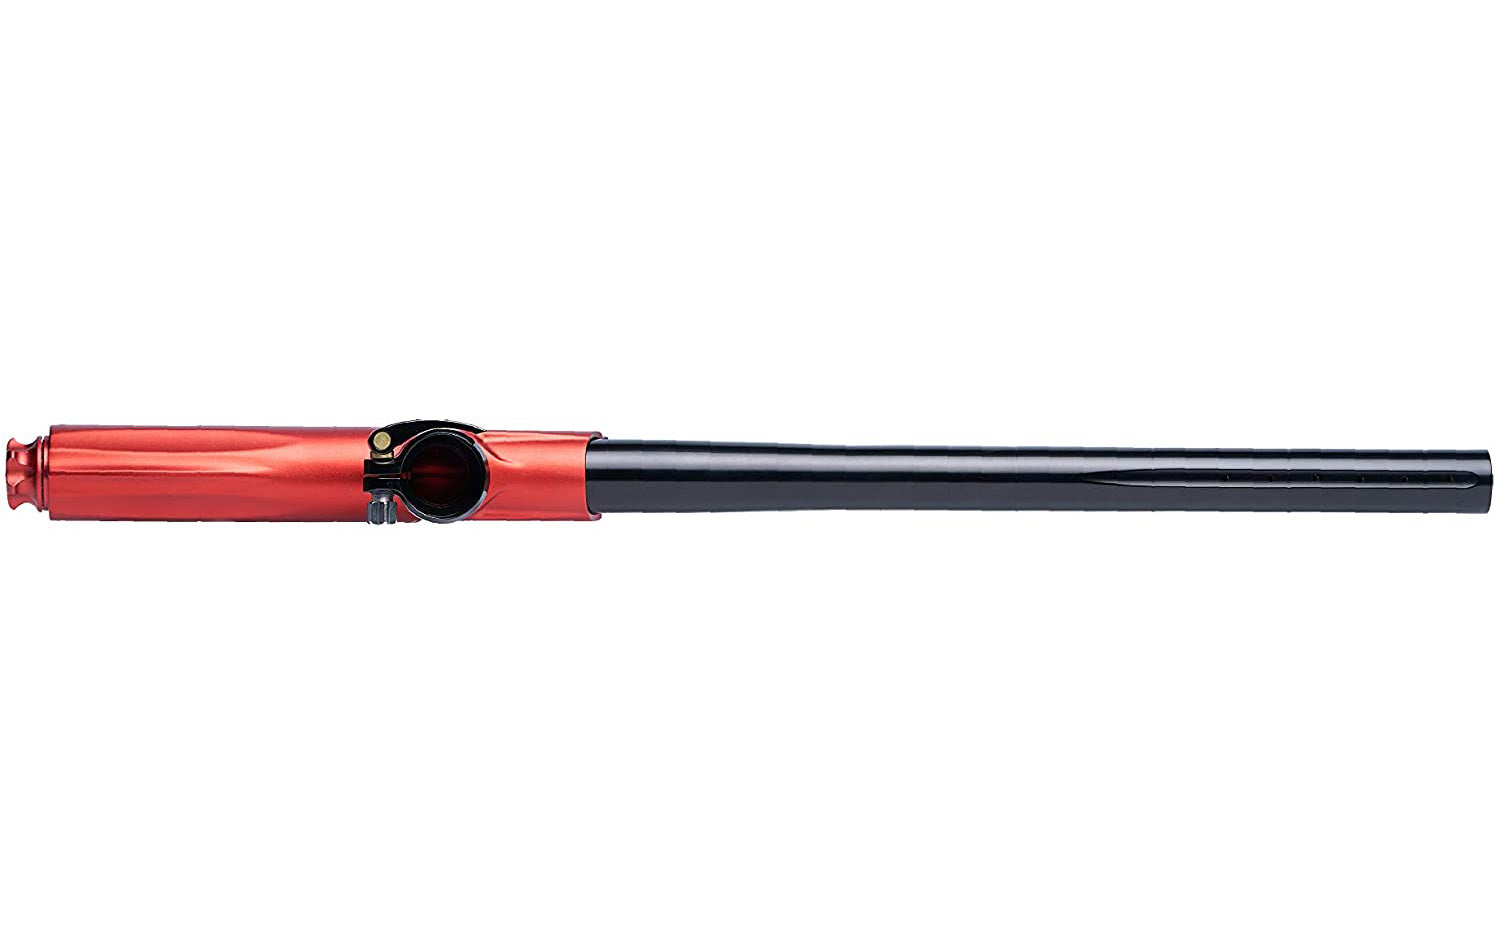  Mercury Rise Hail Semi Auto .68 Caliber Paintball Gun Marker  (Hail Black) : Sports & Outdoors